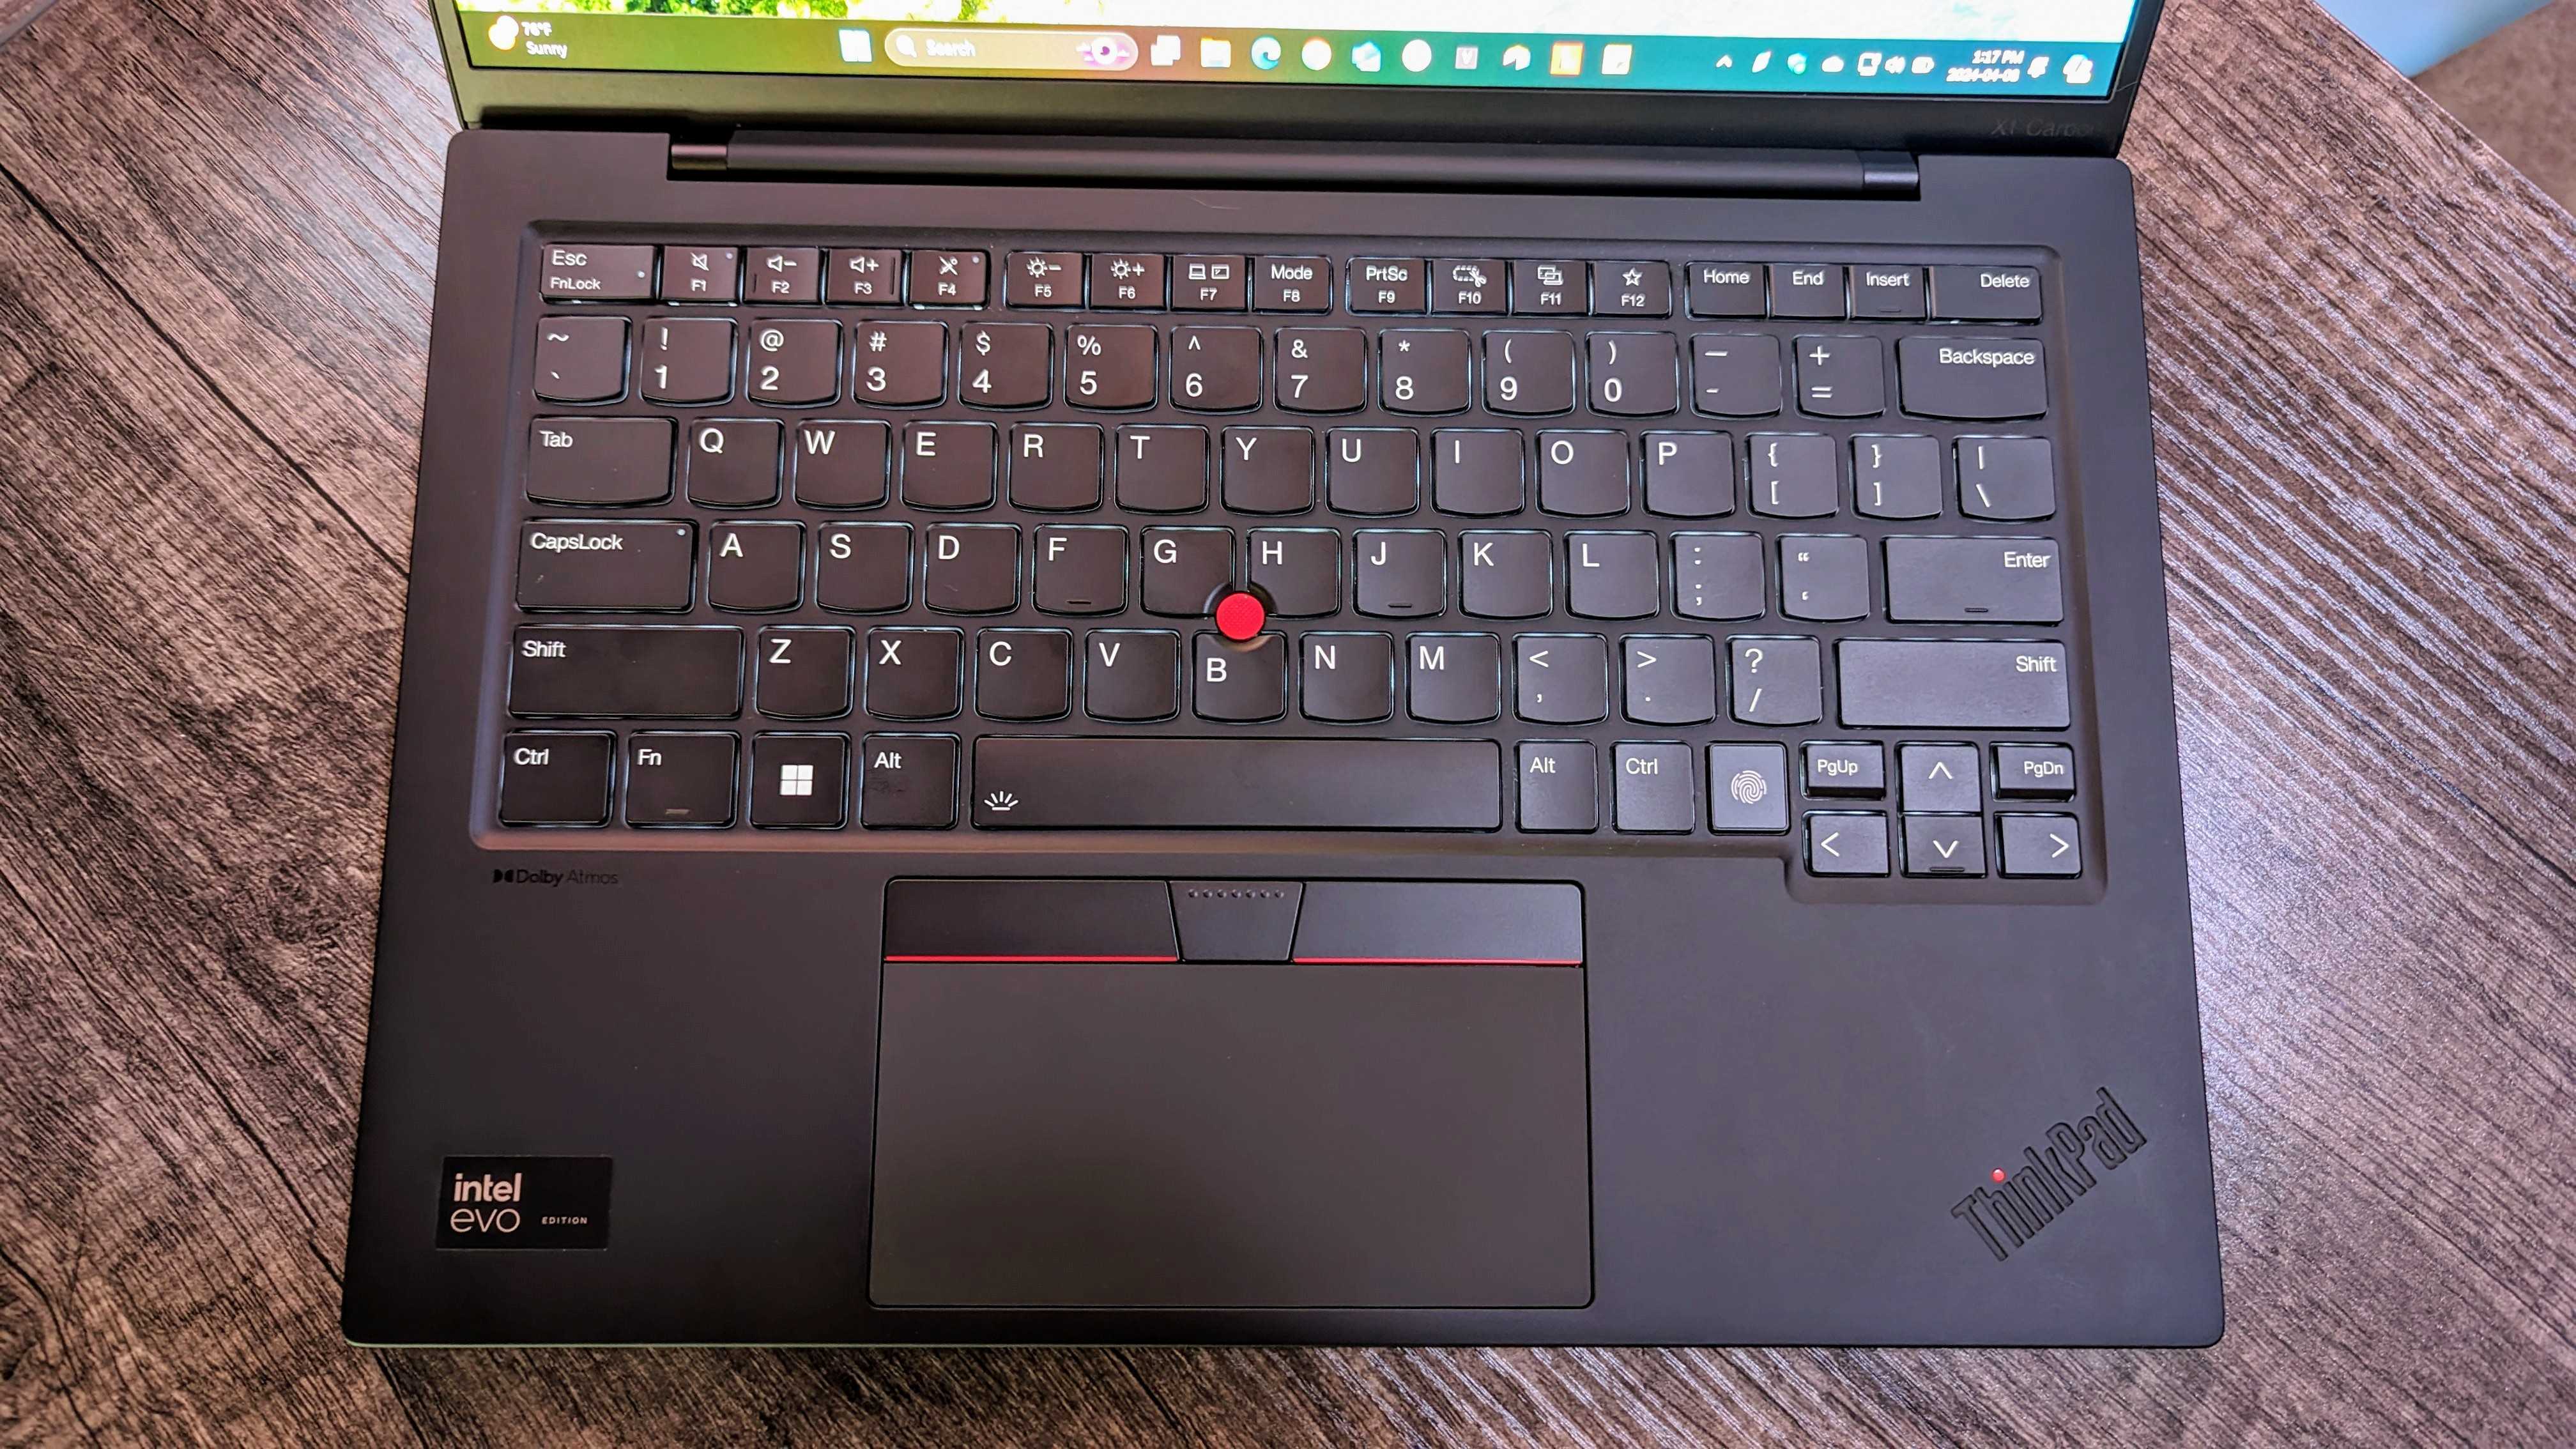 Lenovo ThinkPad X1 Carbon (第 12 世代) の画像。